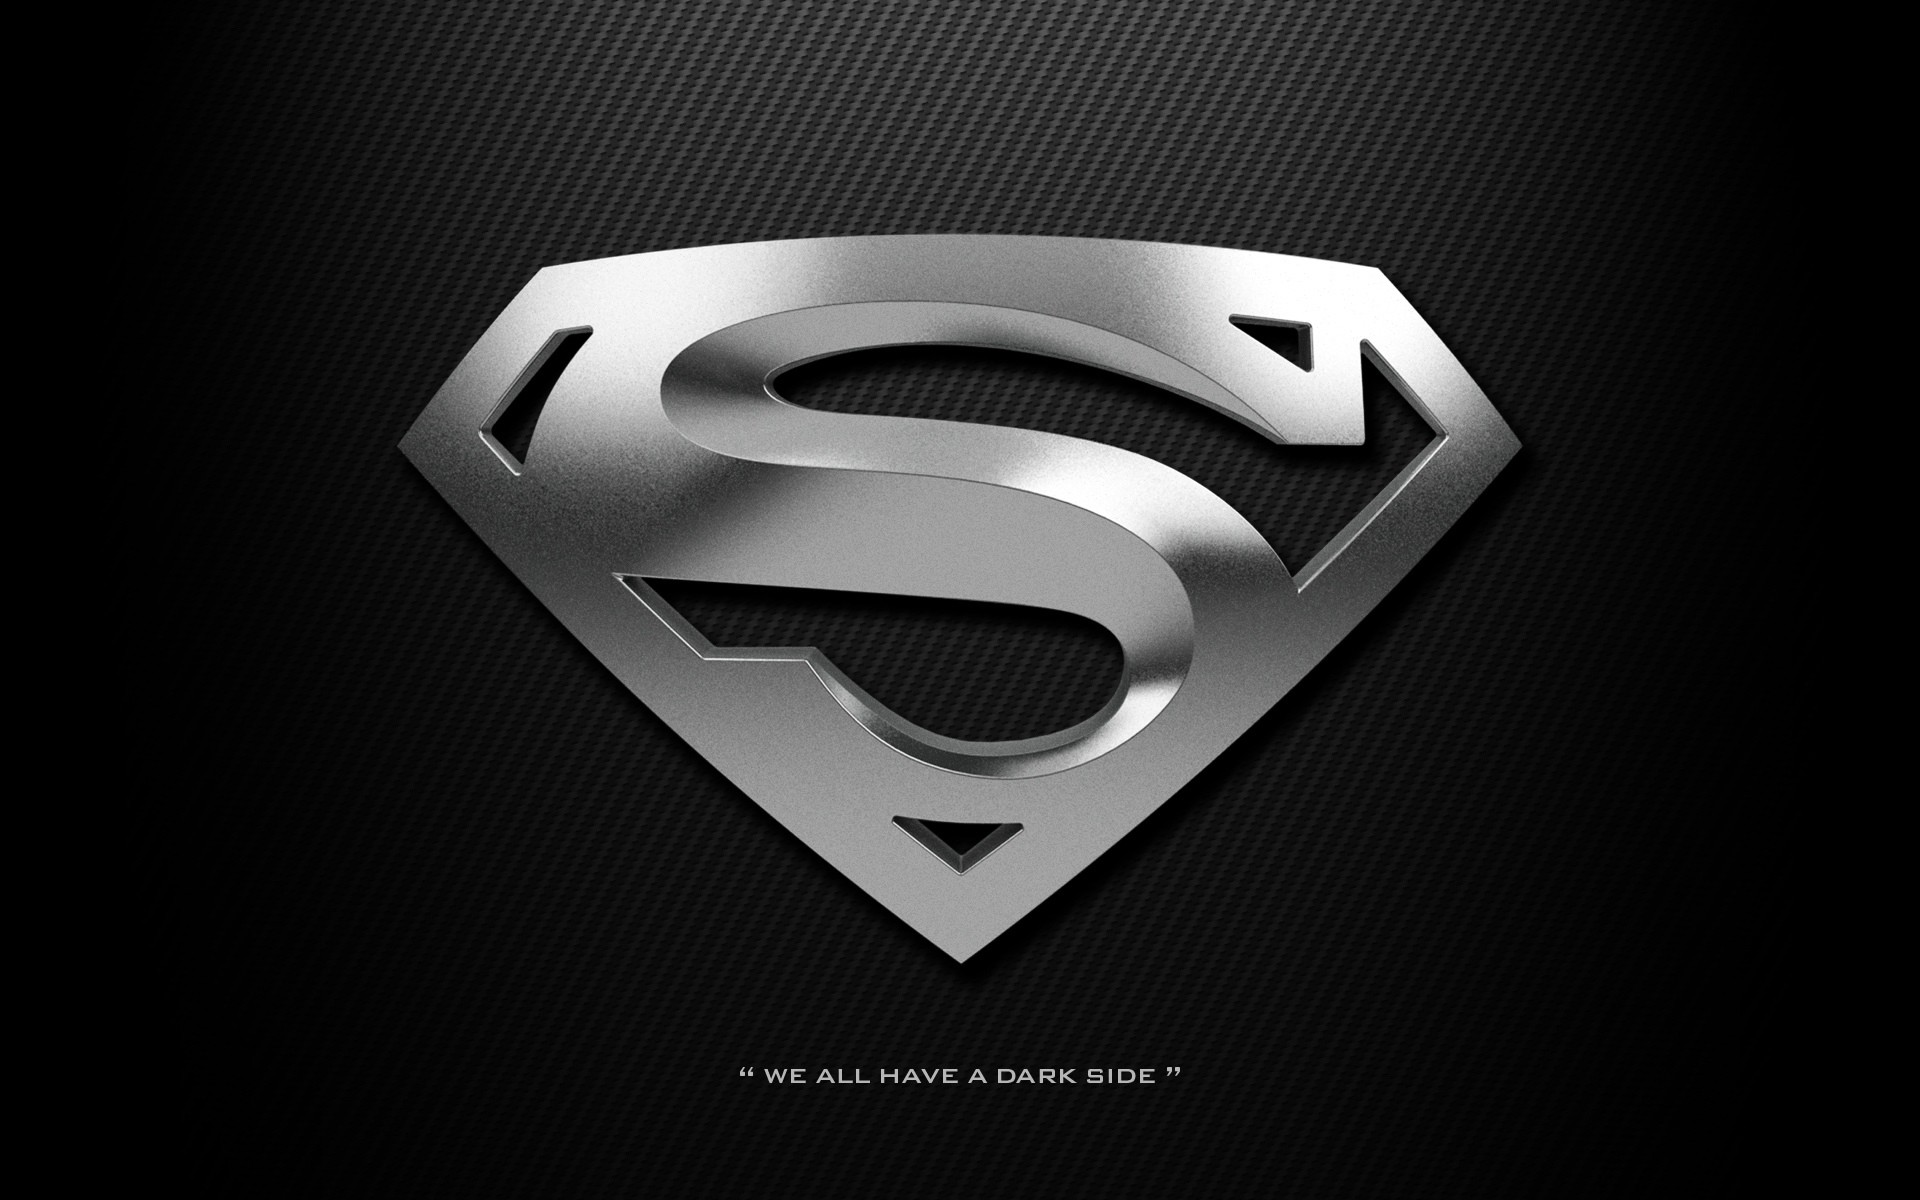 Superman logo wallpaper HD black dark silver chrome carbon We all 1920x1200